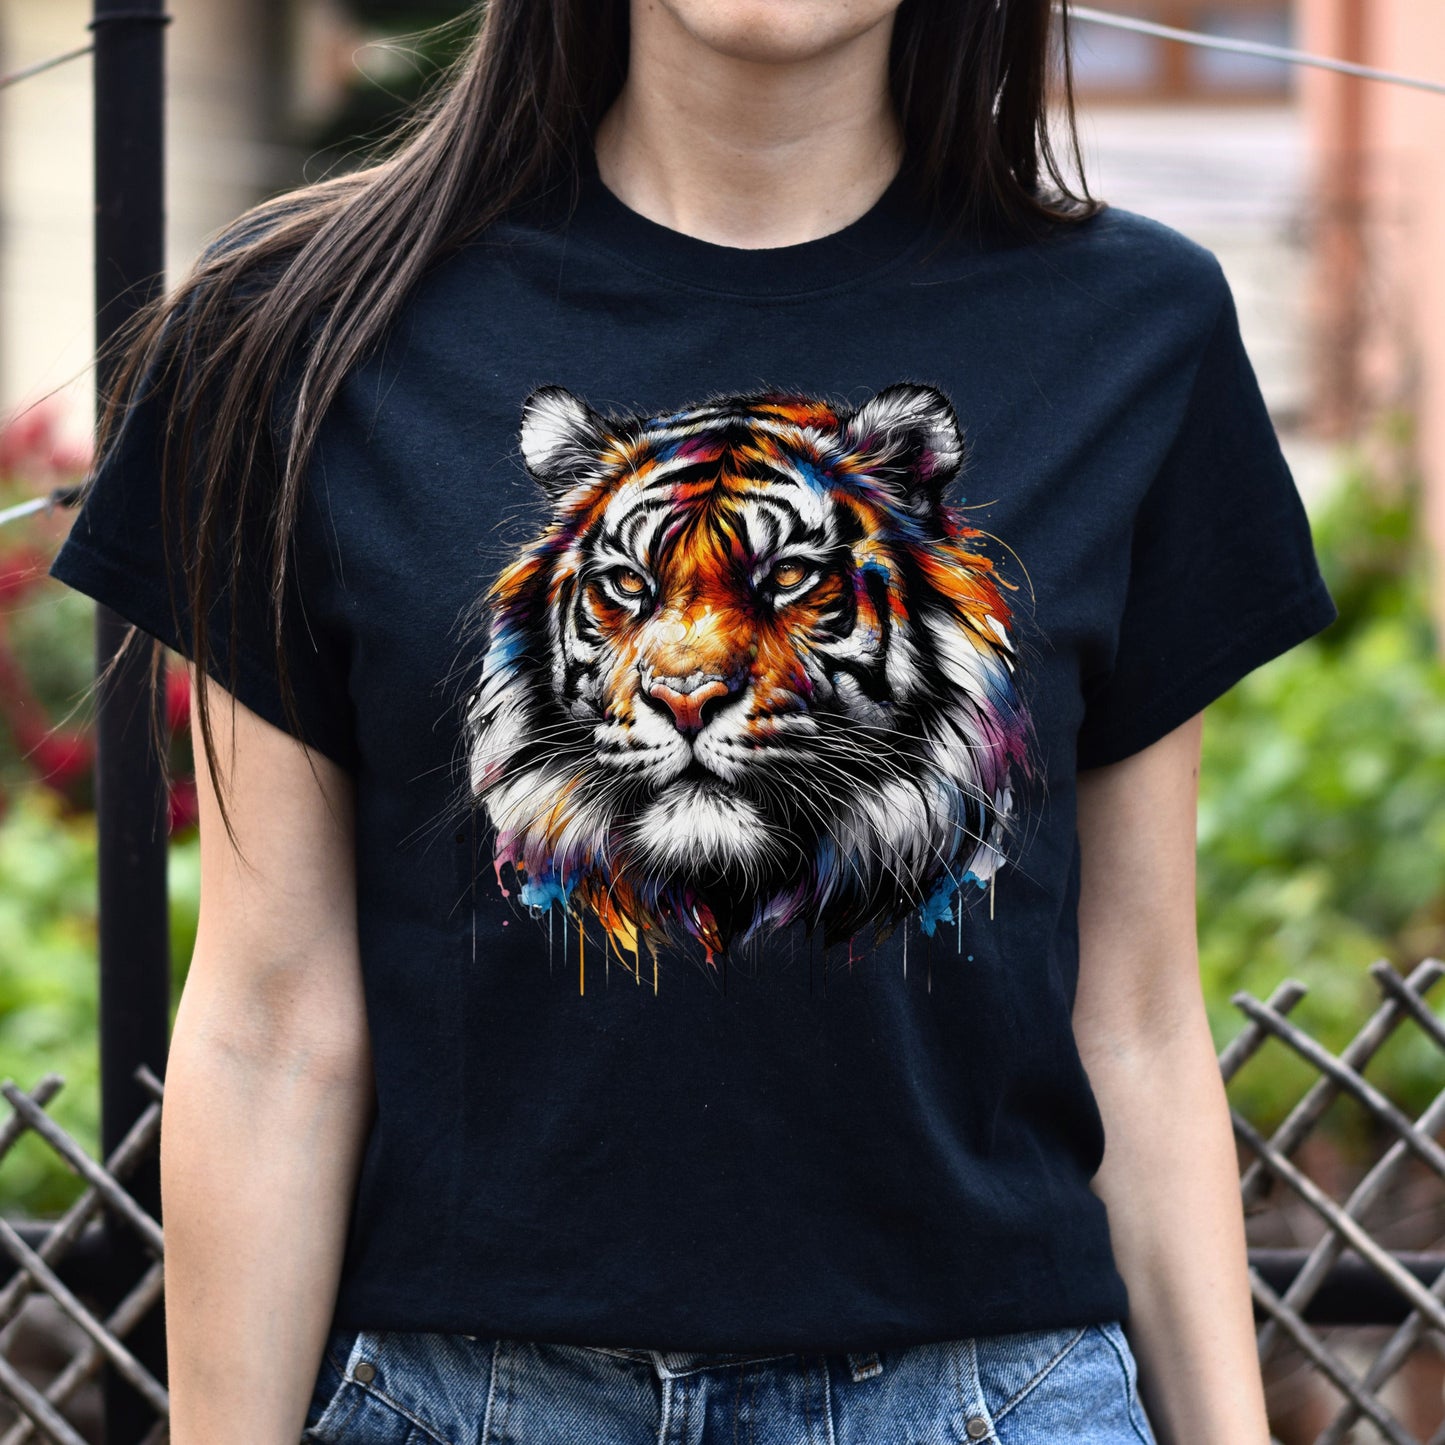 Vibrant Tiger Unisex T-shirt animal lover tee Black Navy Dark Heather-Black-Family-Gift-Planet